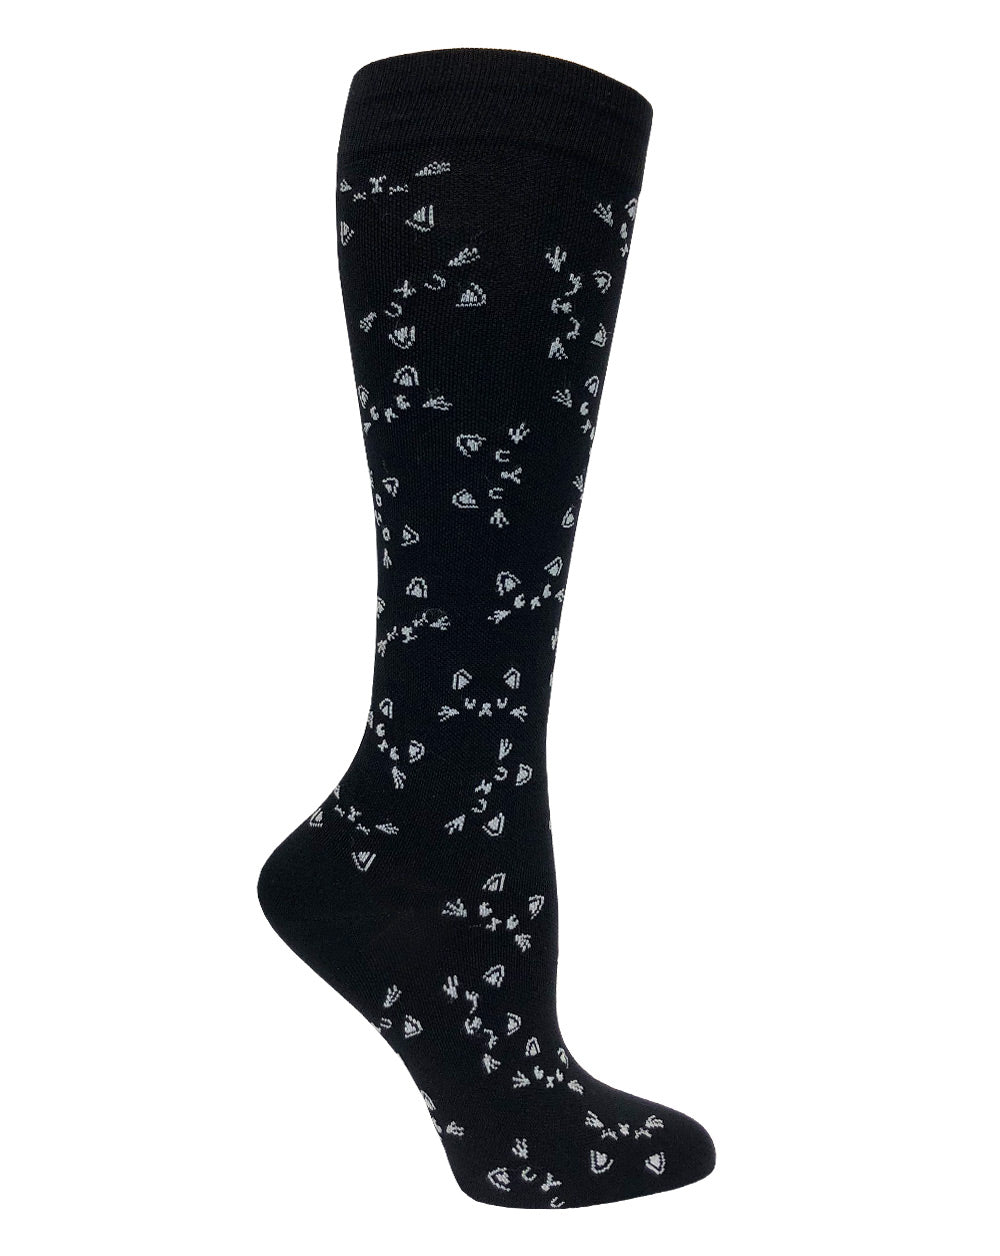 12" Premium Knit Compression Socks by Prestige / Cats Black & White